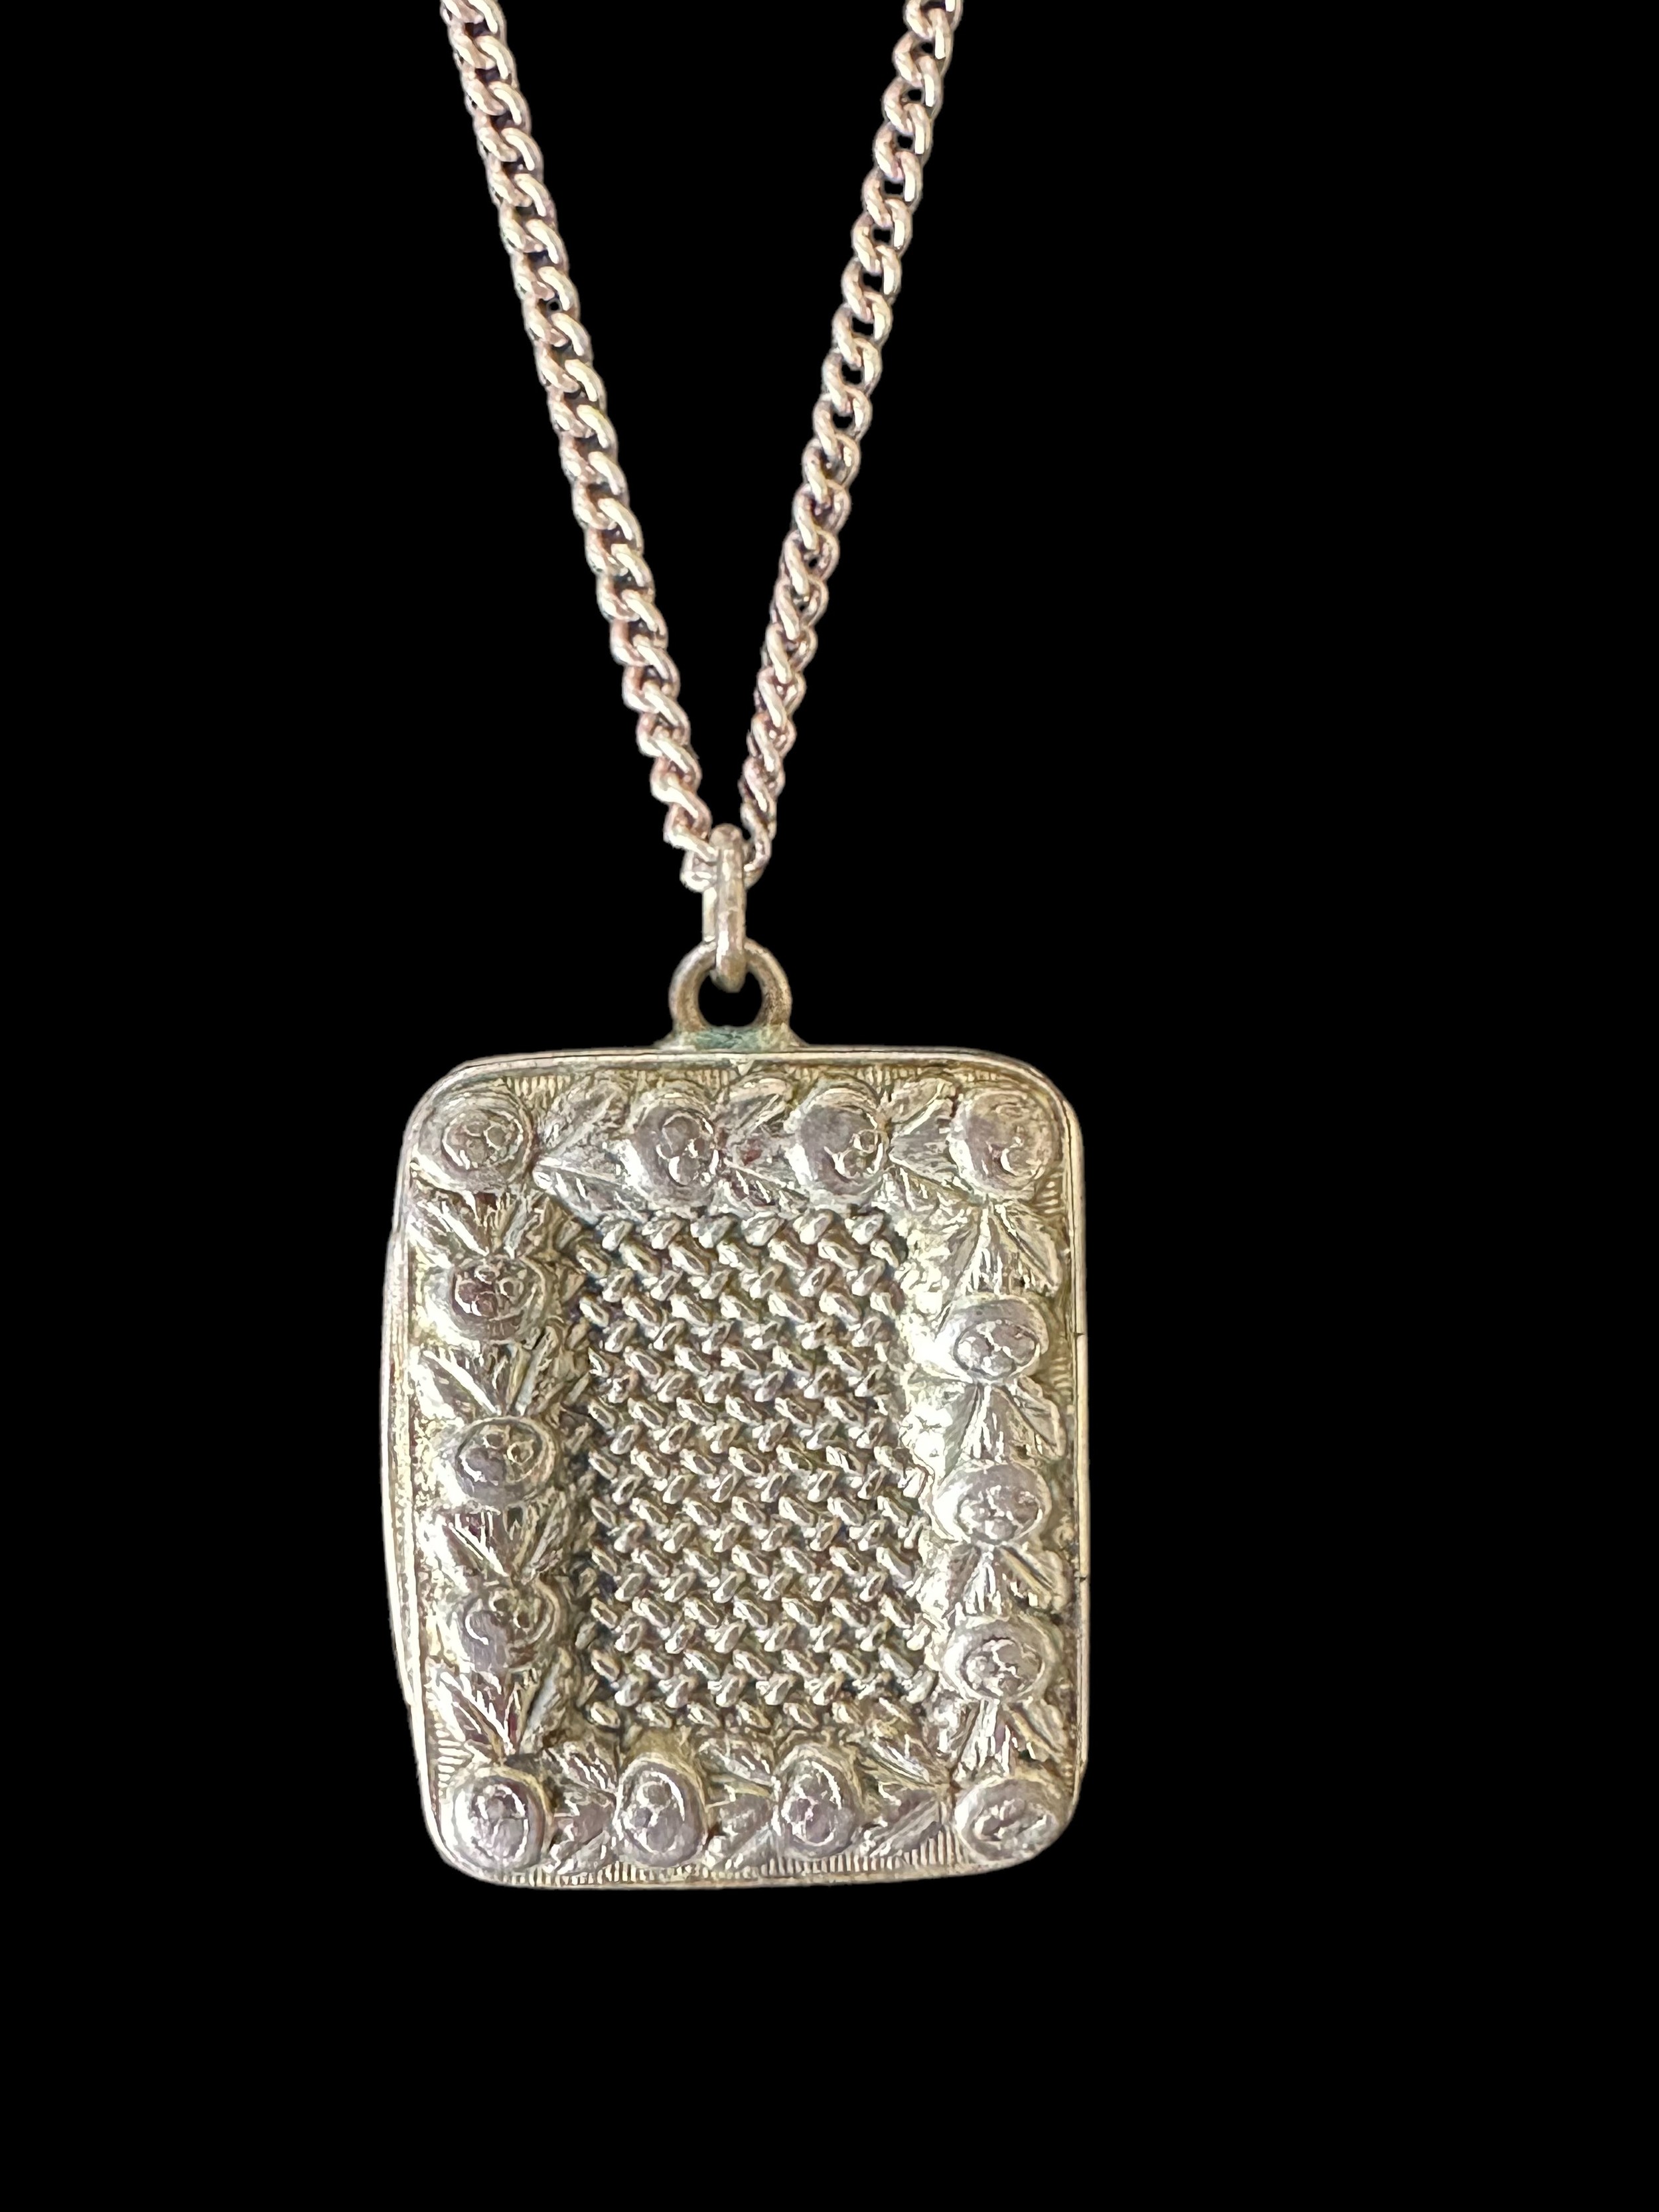 A silver vinaigrette pendant with gilt interior. Marked M.E.H. in the interior. Hallmarks rubbed and